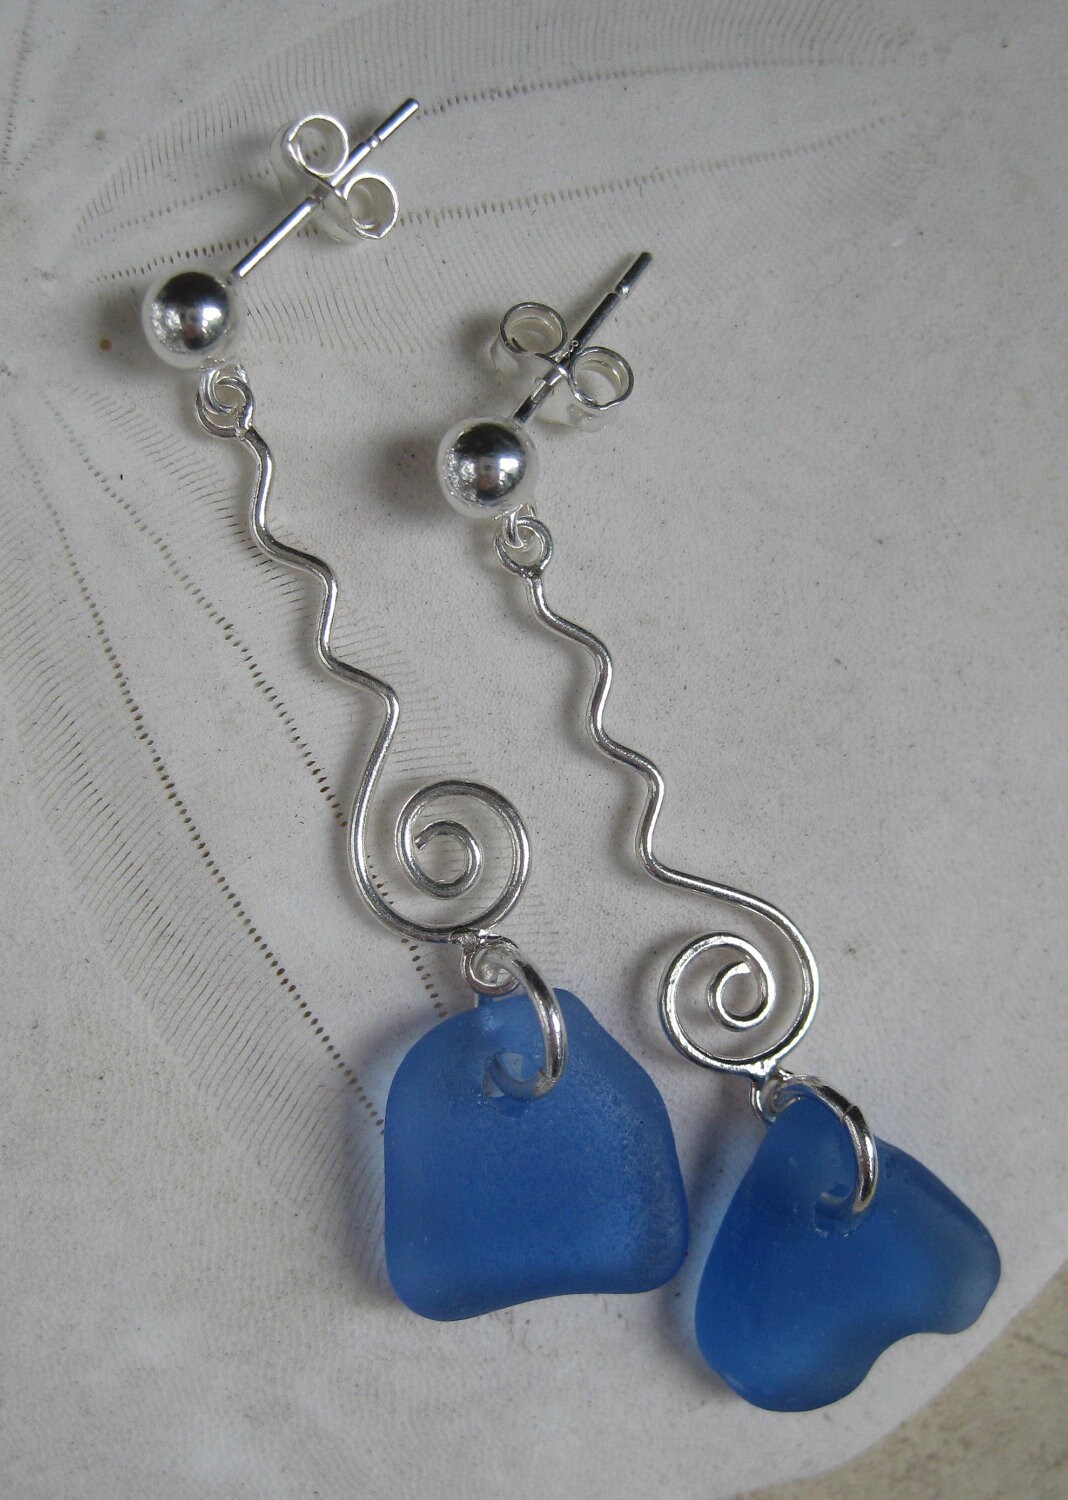  Glass Earrings on Sea Glass Earrings Sea Squiggles Cobalt By Mermaidstearsjewelry